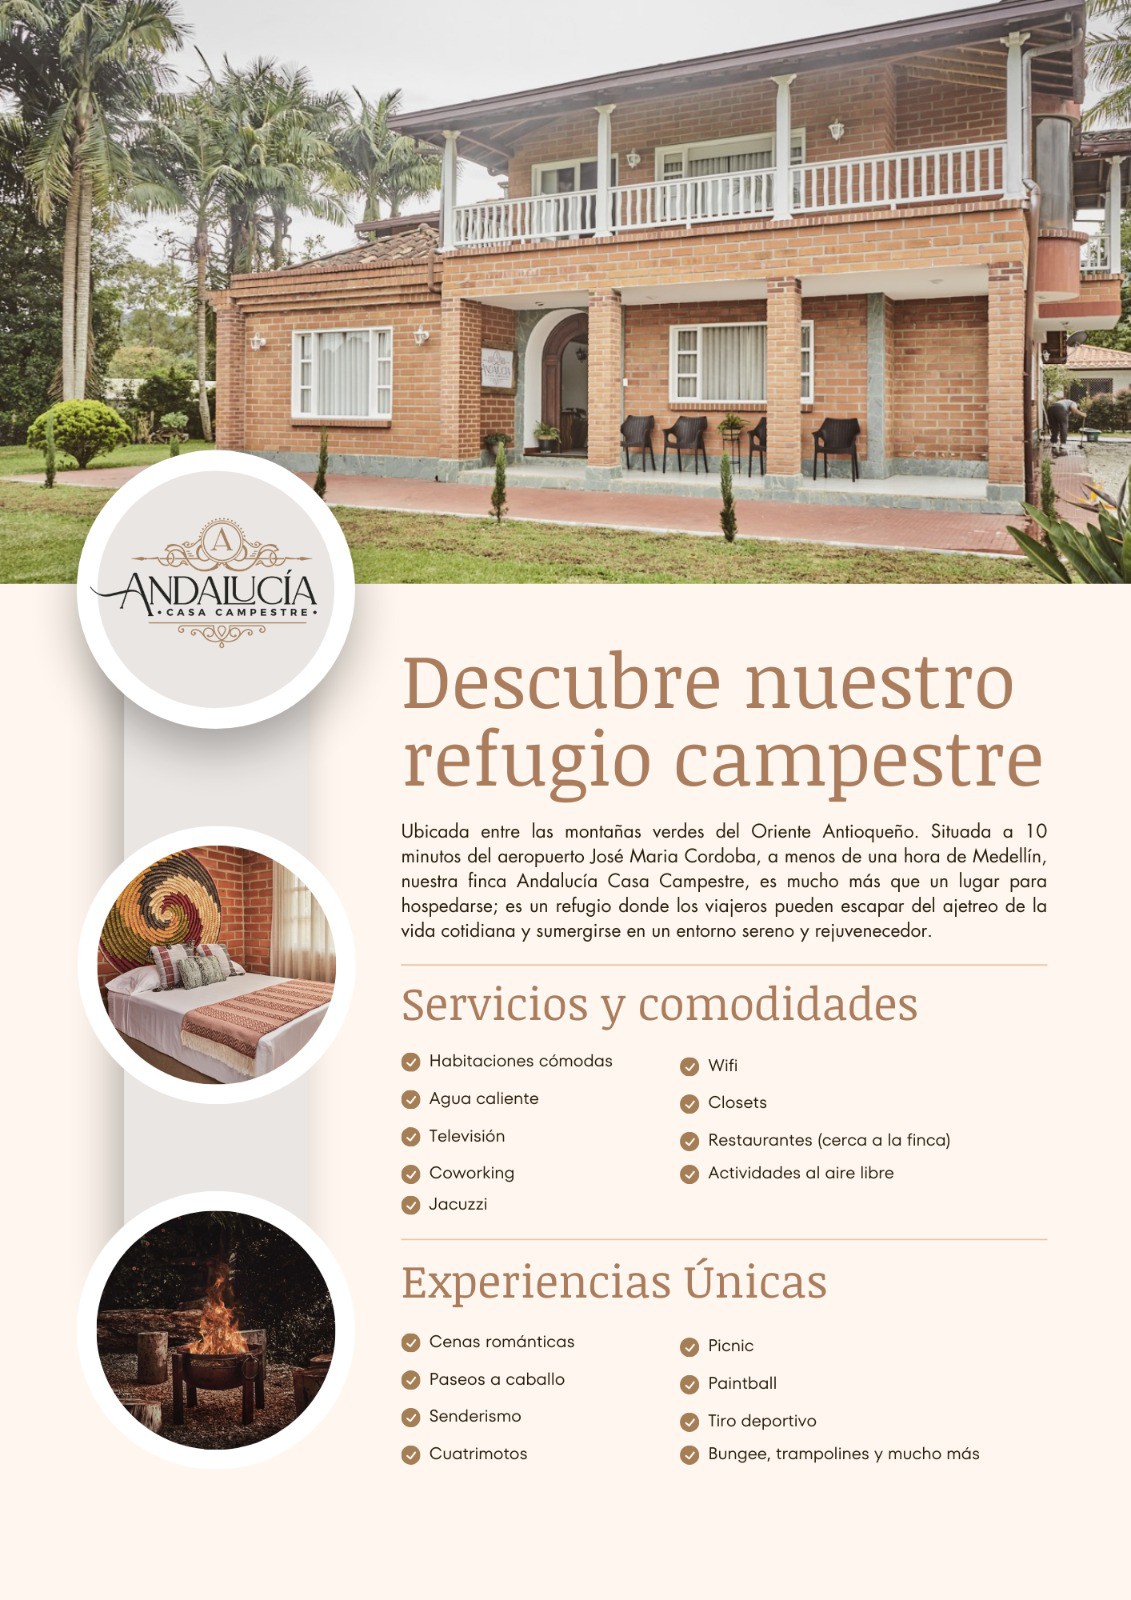 Casa Campestre Andalucía